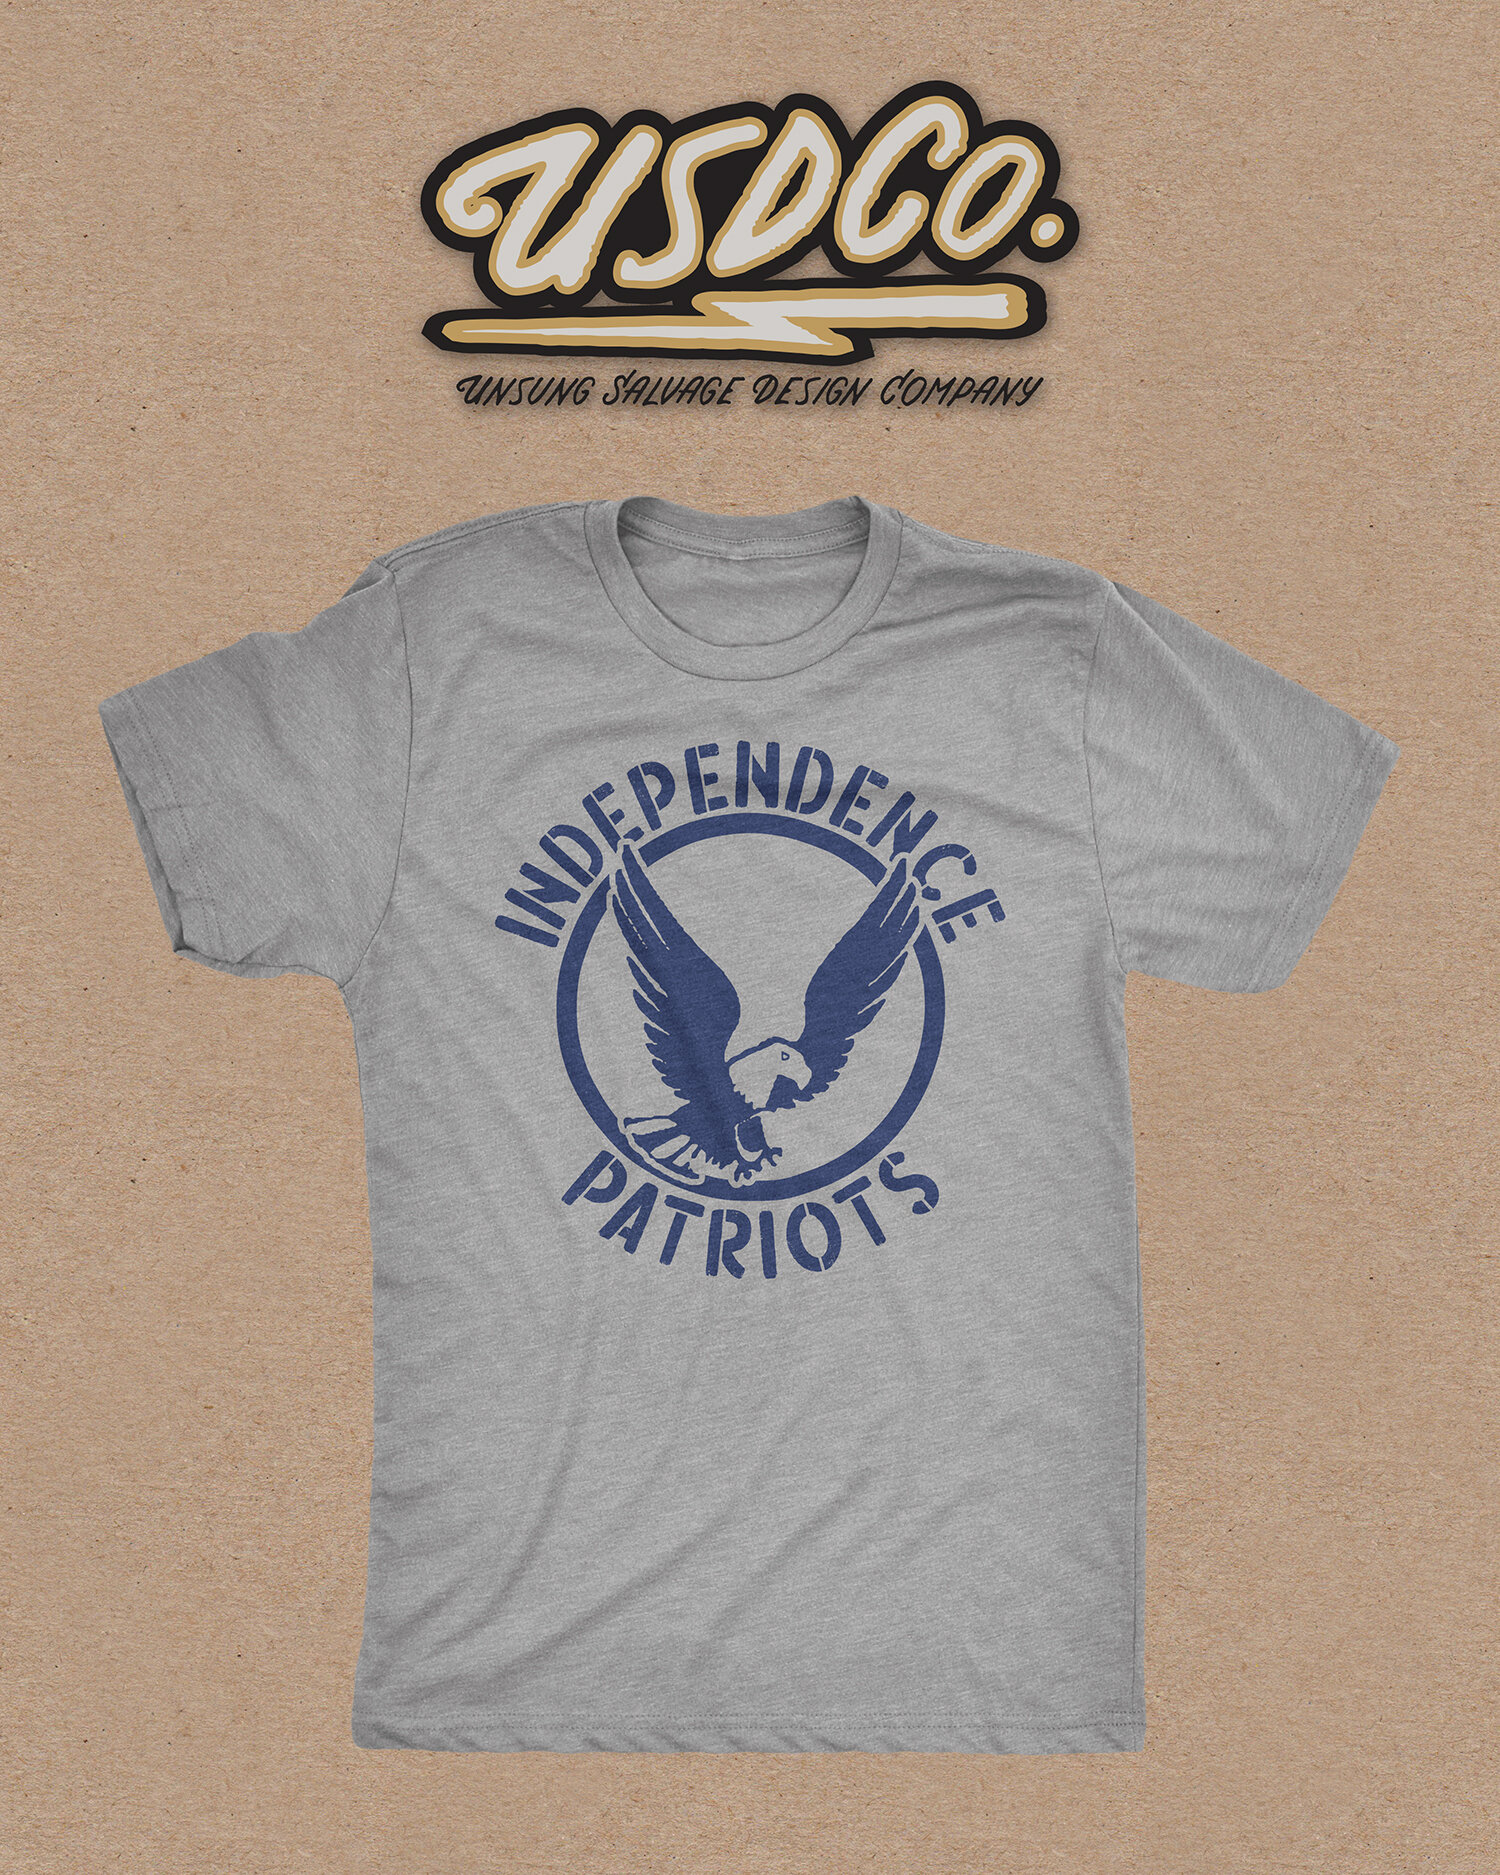 Independence Patriots (T-shirt) — Unsung Salvage Design - t-shirts, custom screen printing, pieces, custom woodworking